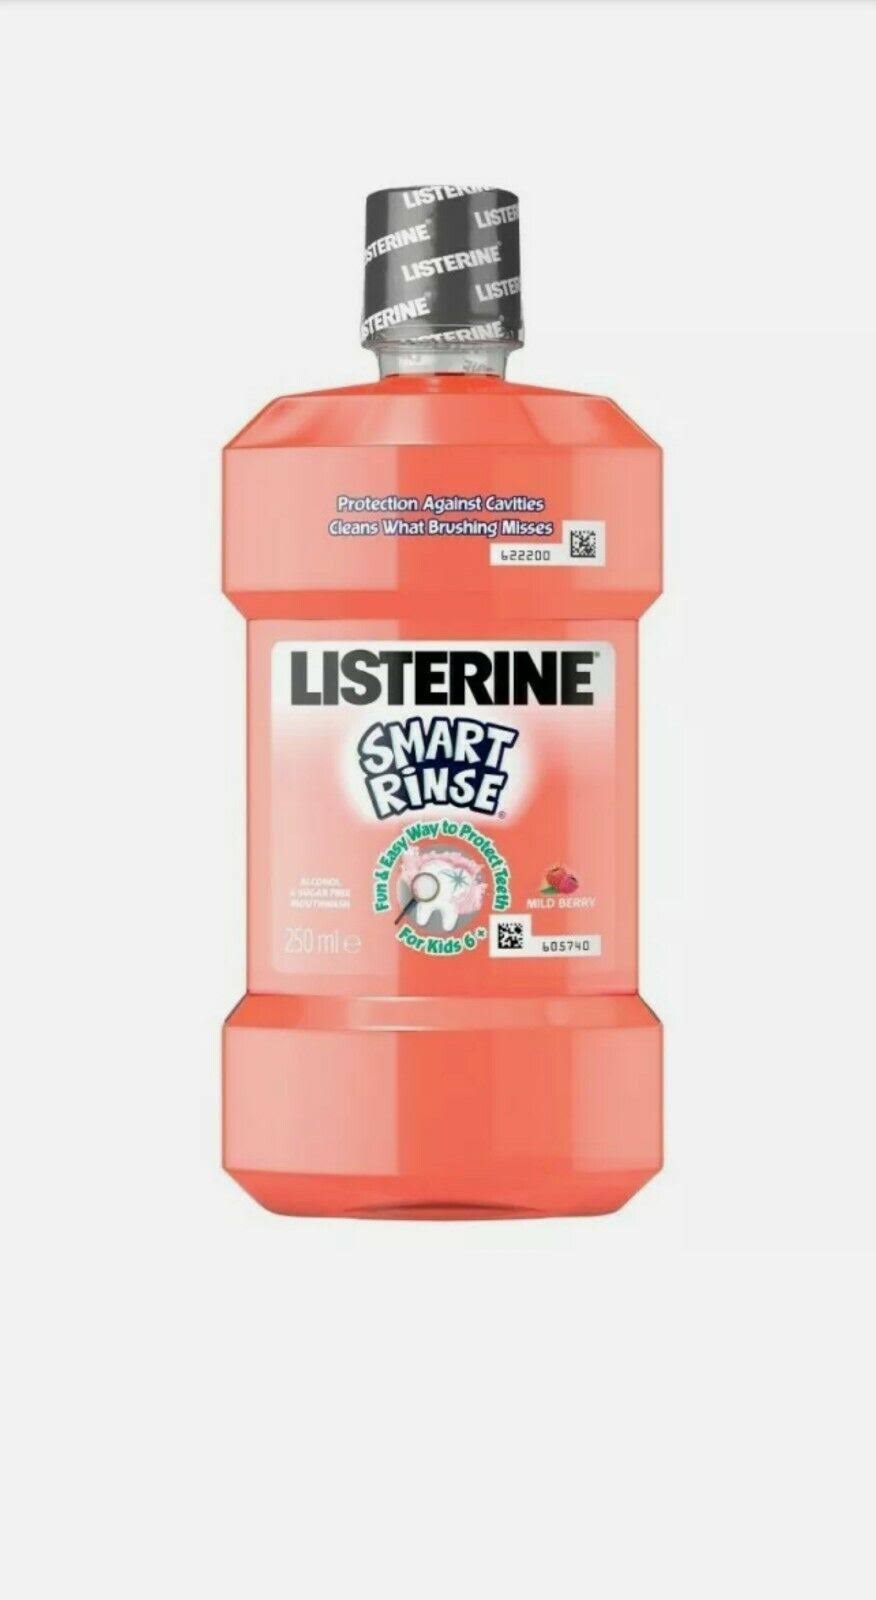 Listerine Smart Rinse Mouthwash - Mild Berry, 250ml